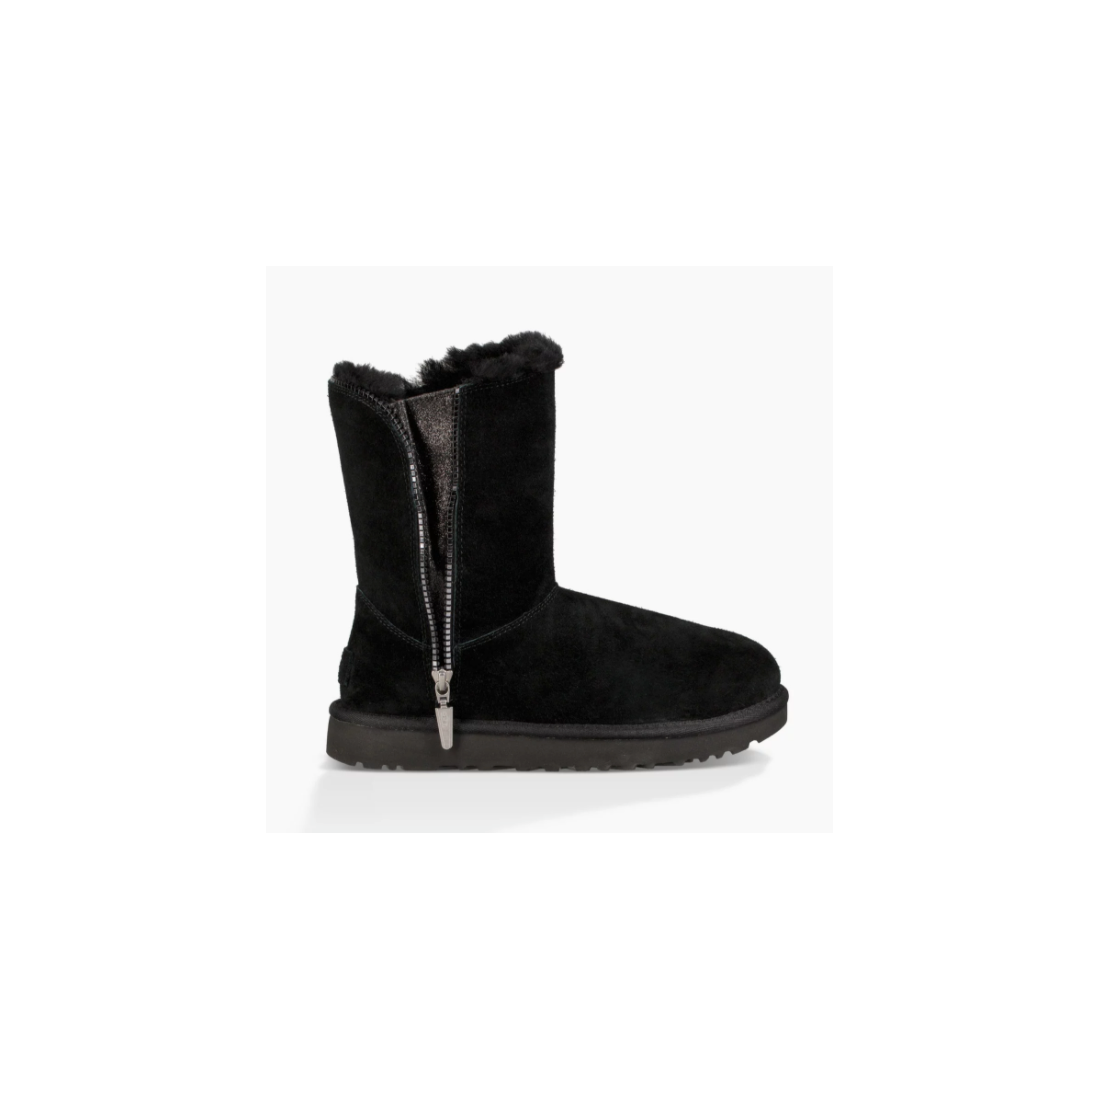 Marice boot black